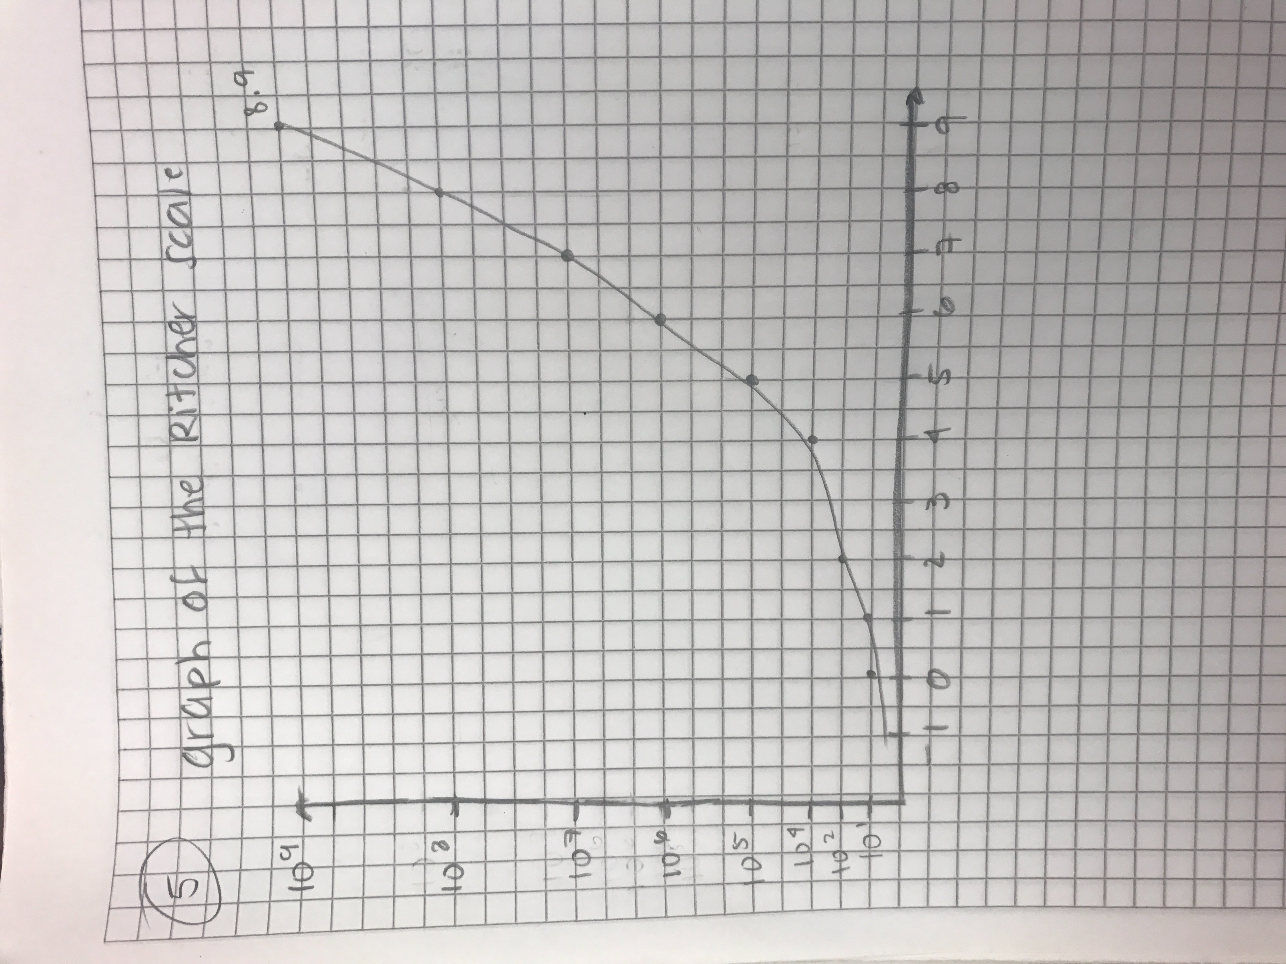 problem 5 (graph)